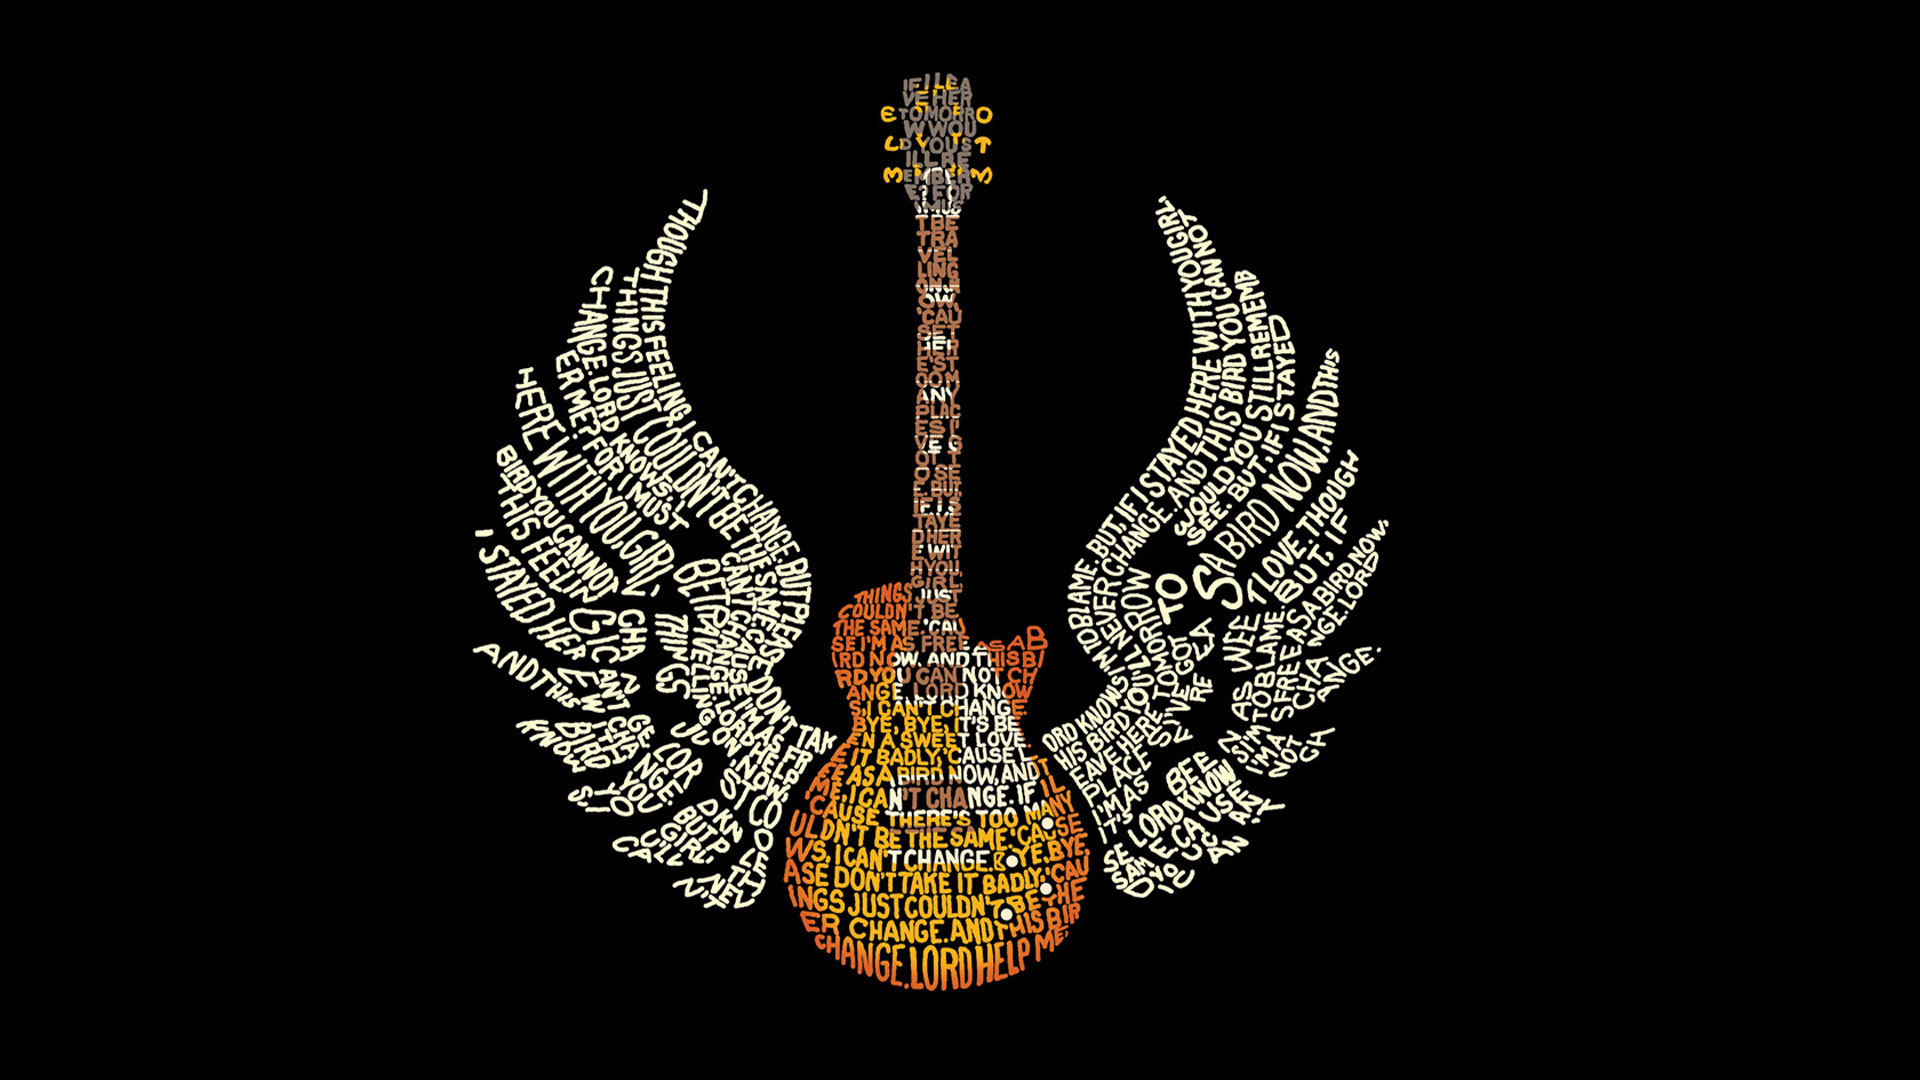 1920x1080 hd pics photos music guitar wings text logo desktop background wallpaper